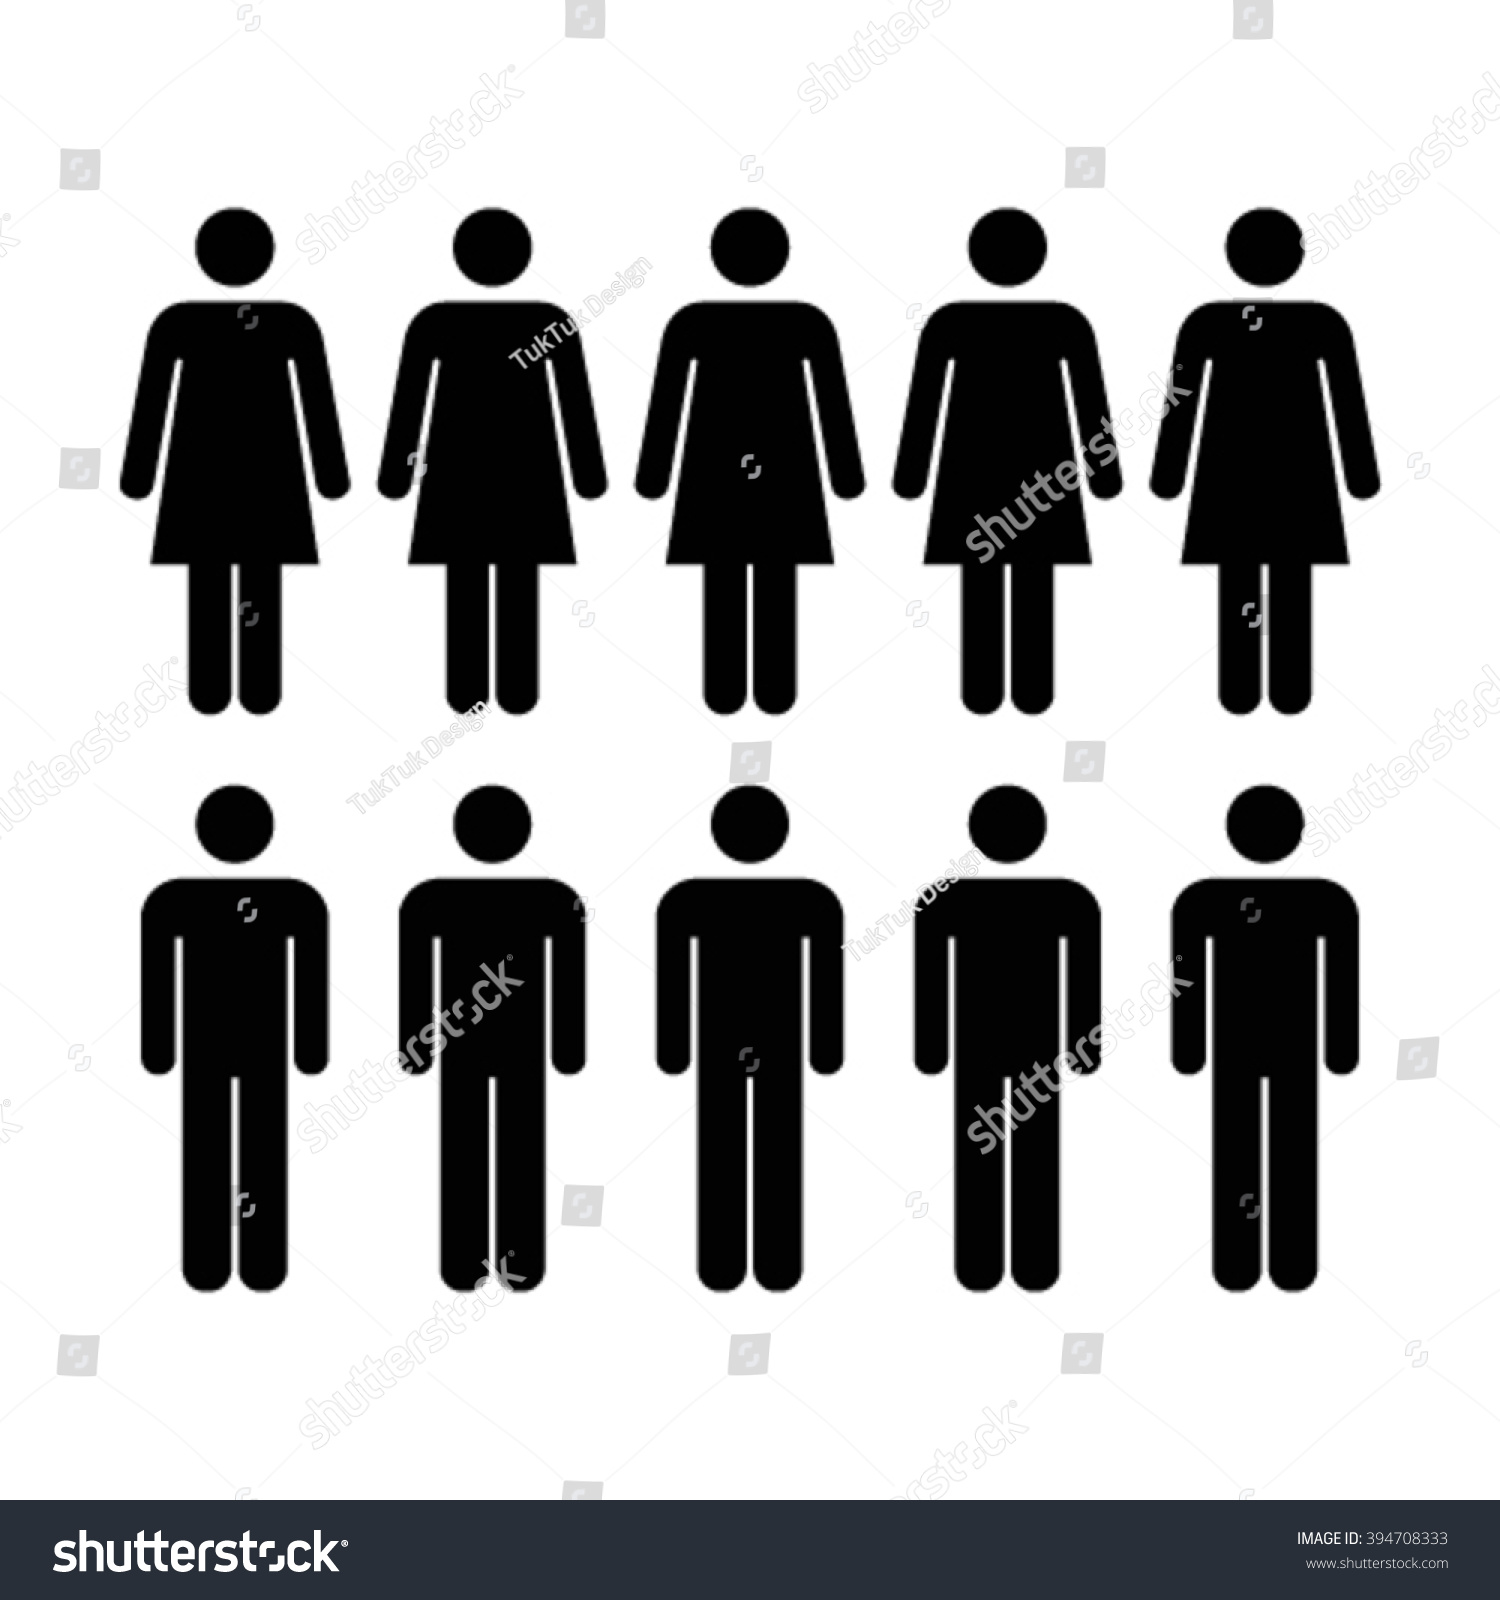 People Icon - Men & Woman Vector - 394708333 : Shutterstock